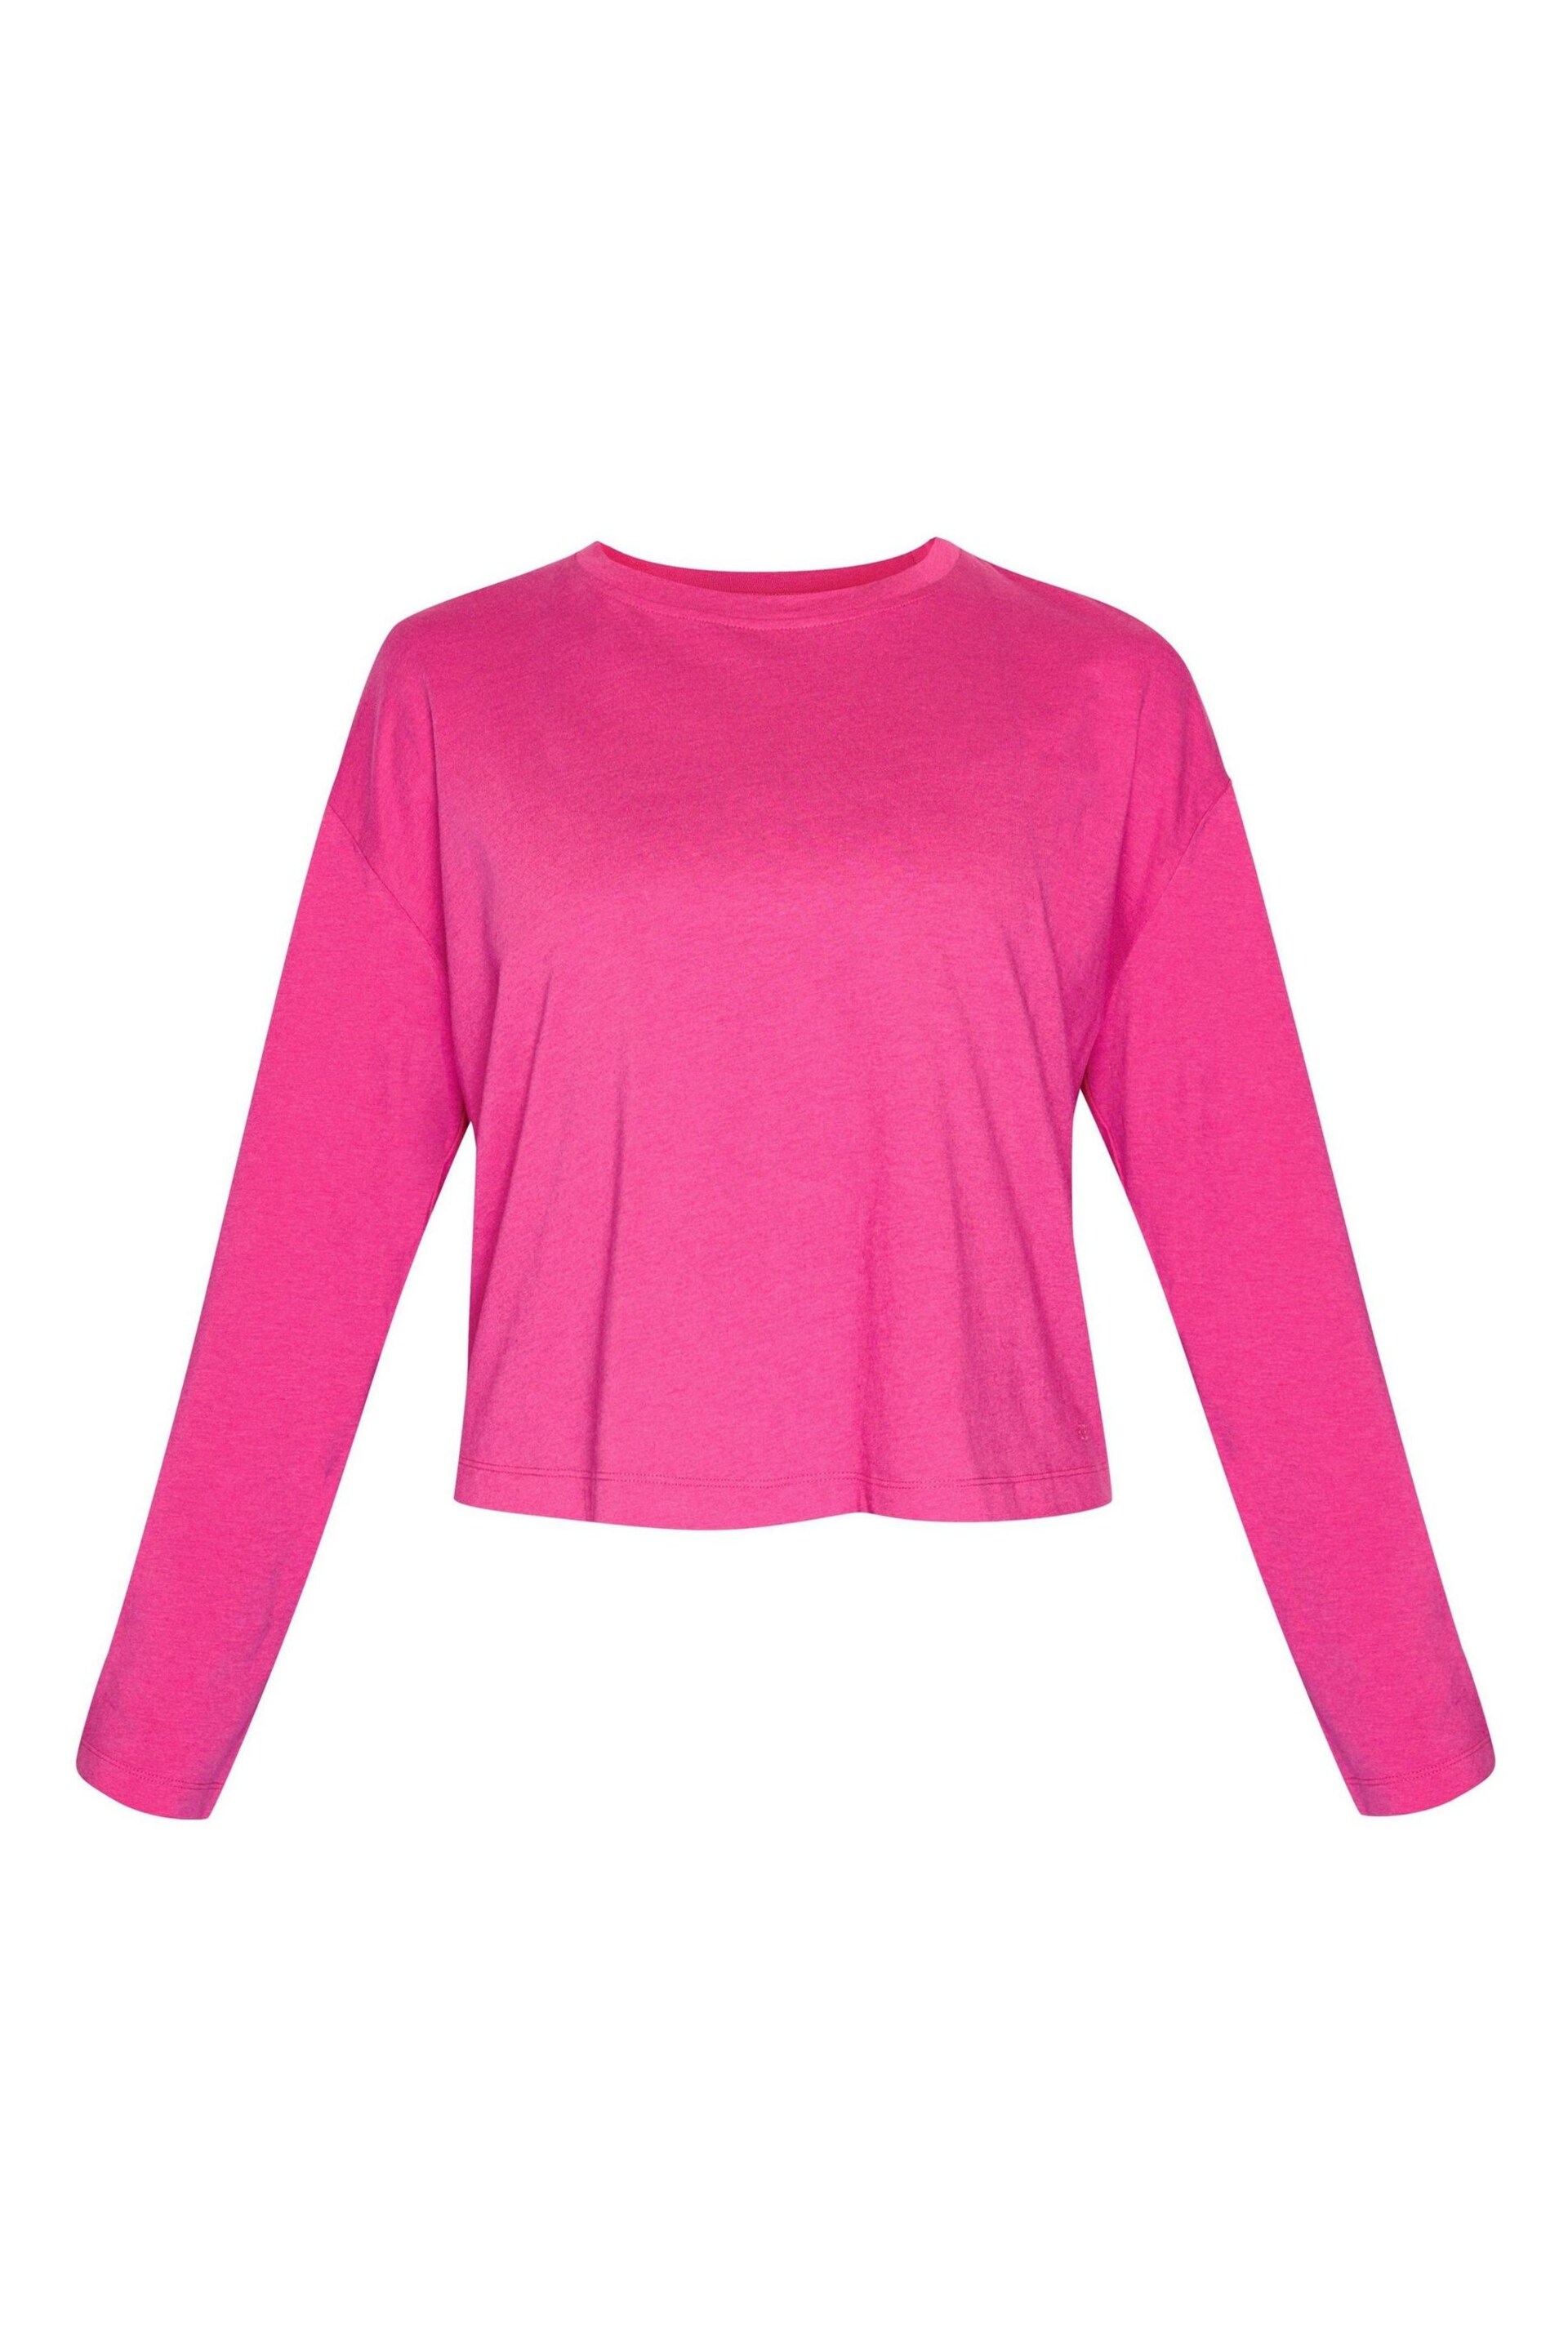 Sweaty Betty Beet Pink Essential Crop Long Sleeve T-Shirt - Image 5 of 7